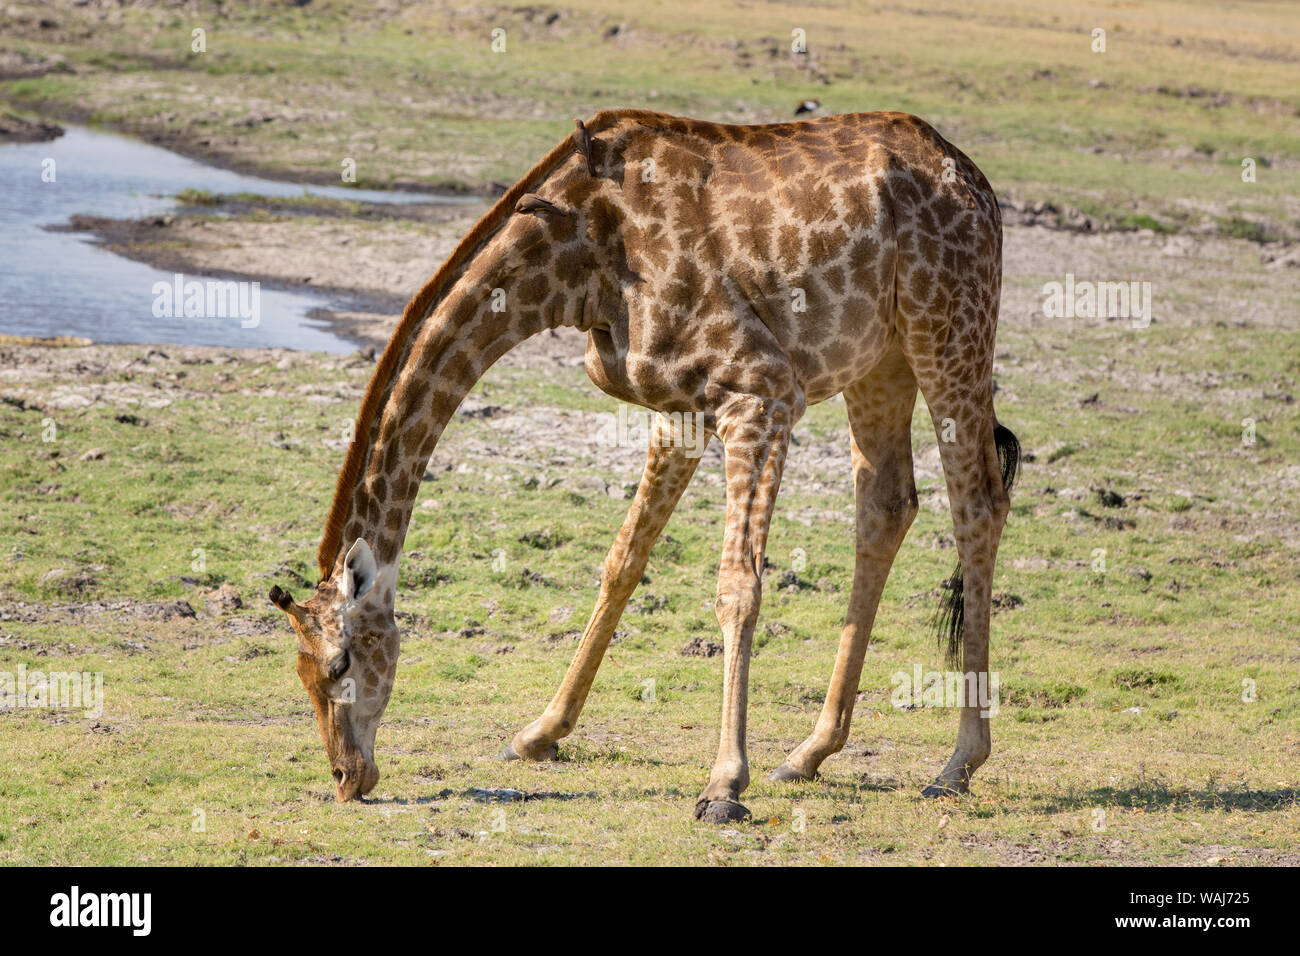 Africa, Botswana Chobe National Park. La giraffa di alimentazione. Credito come: Wendy Kaveney Jaynes / Galleria / DanitaDelimont.com Foto Stock